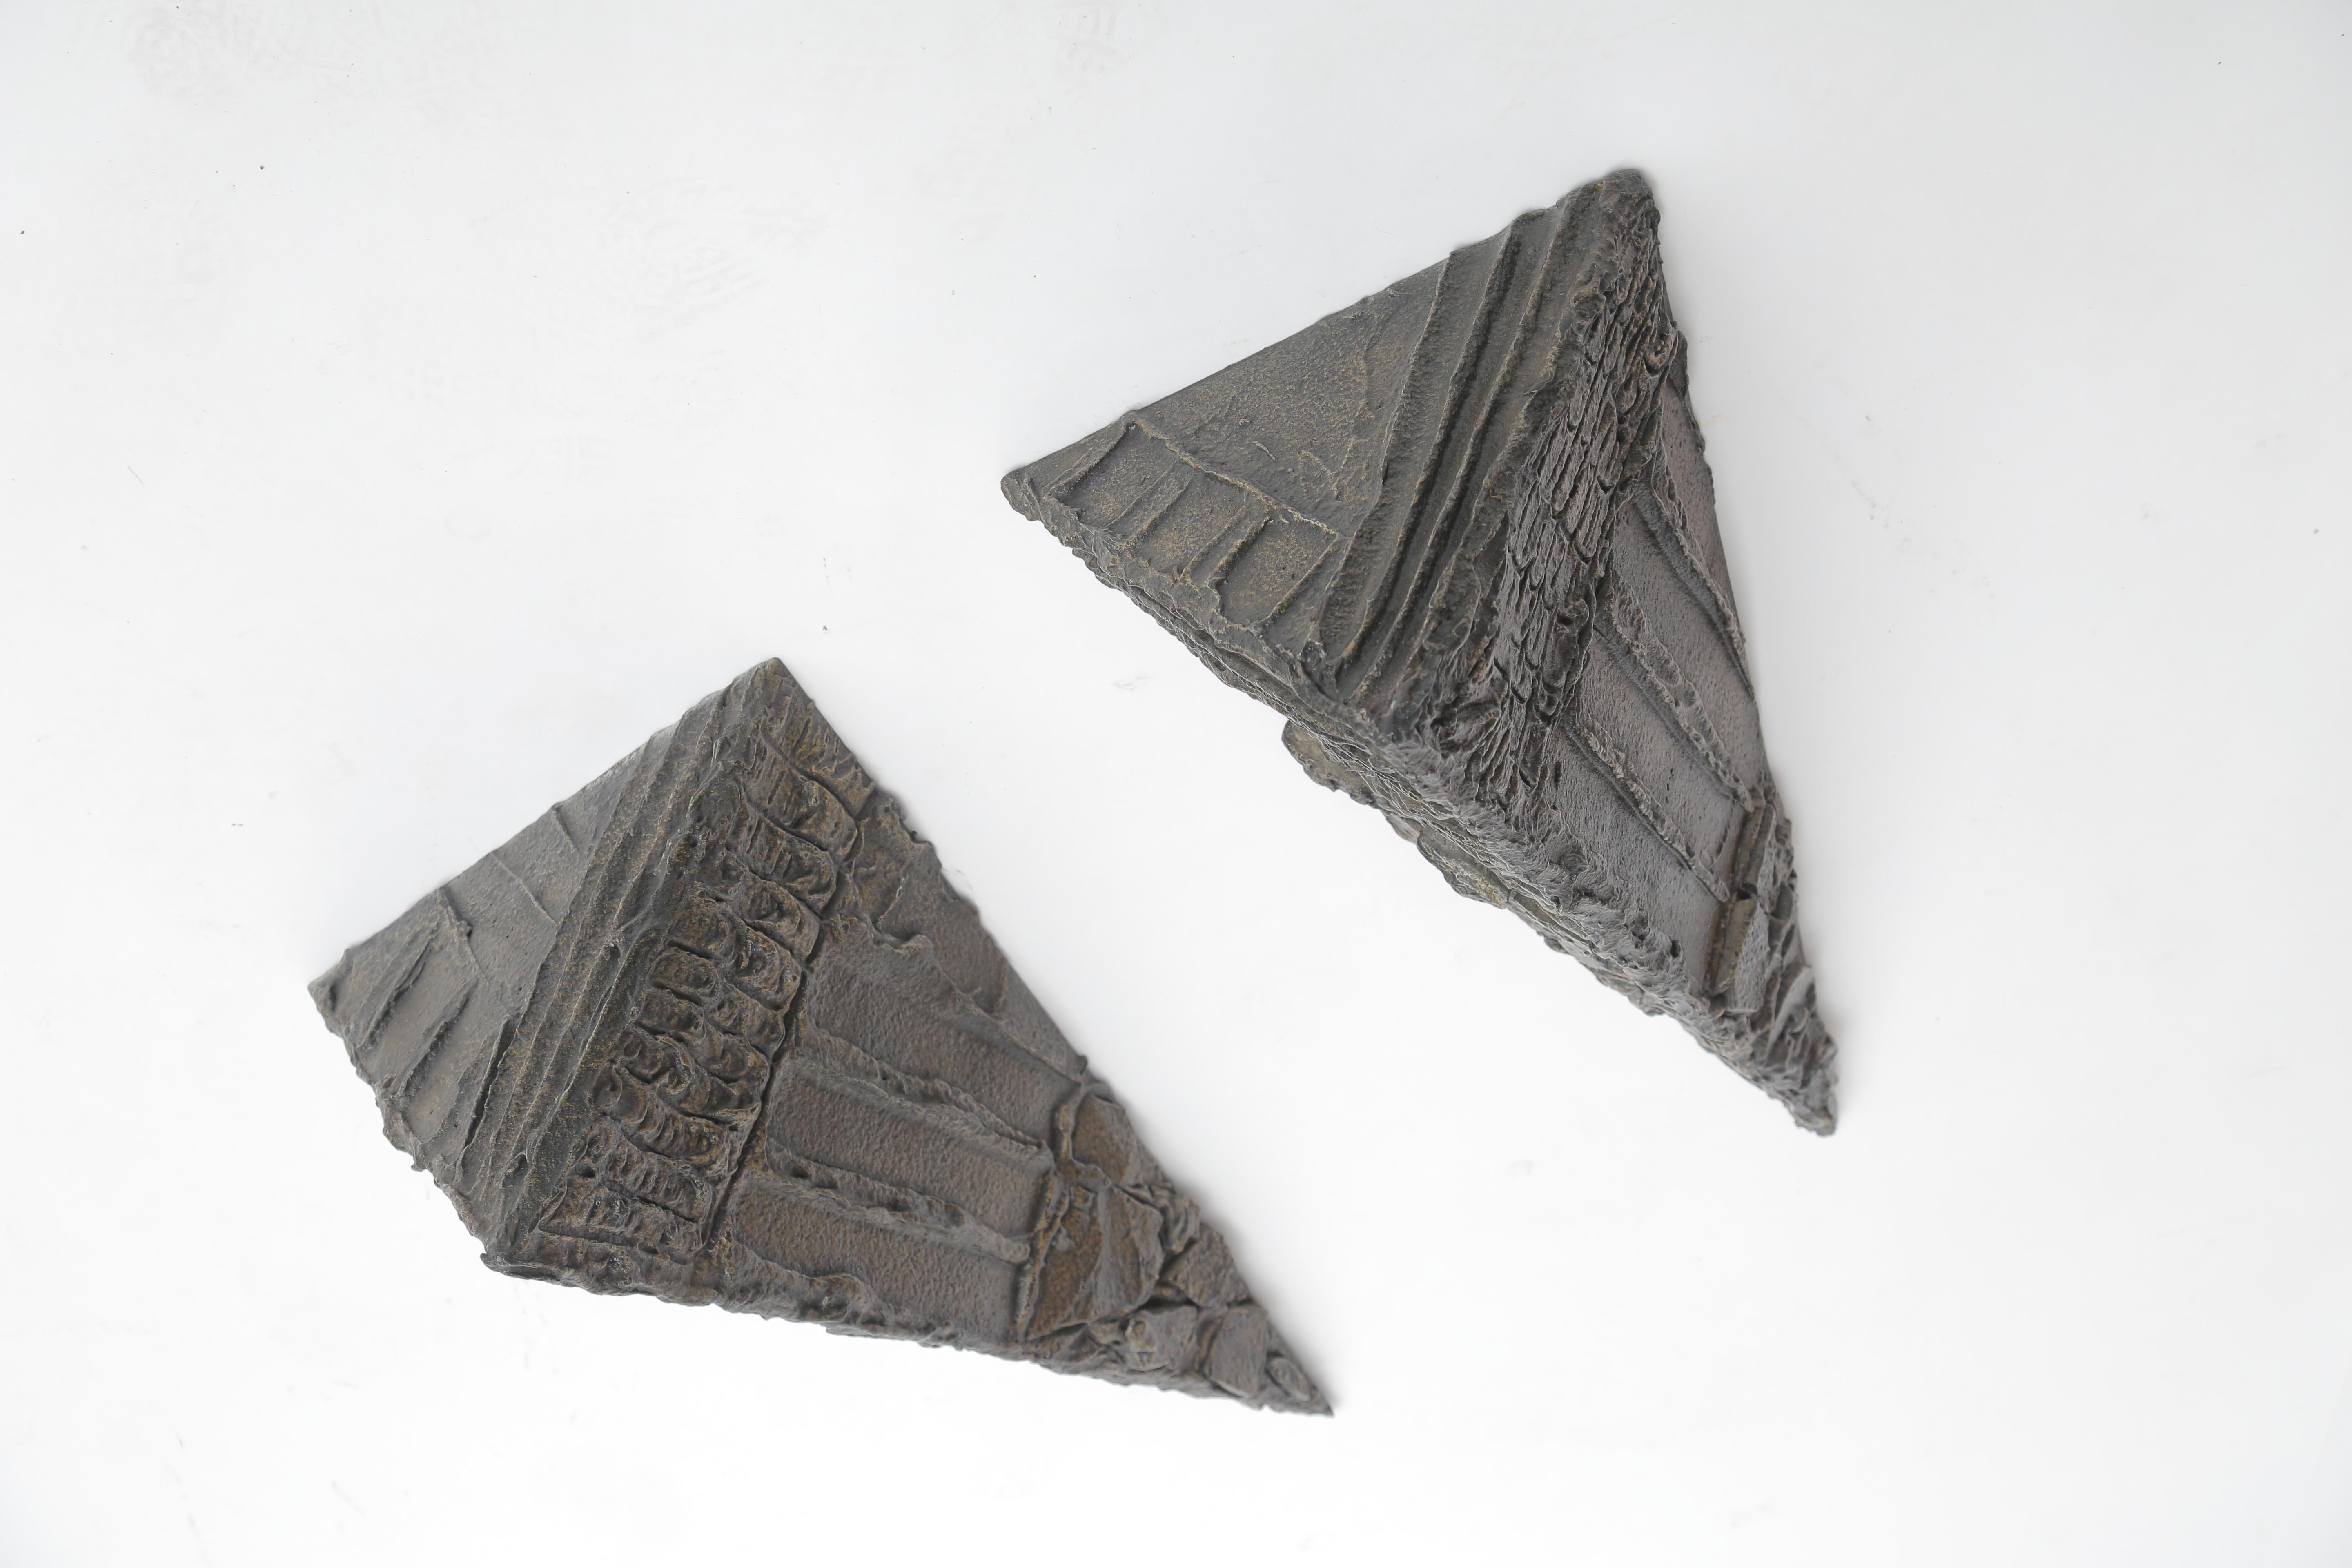 Sculpted bronze wall brackets with original glass shelf
Measures: Glass shelf 60